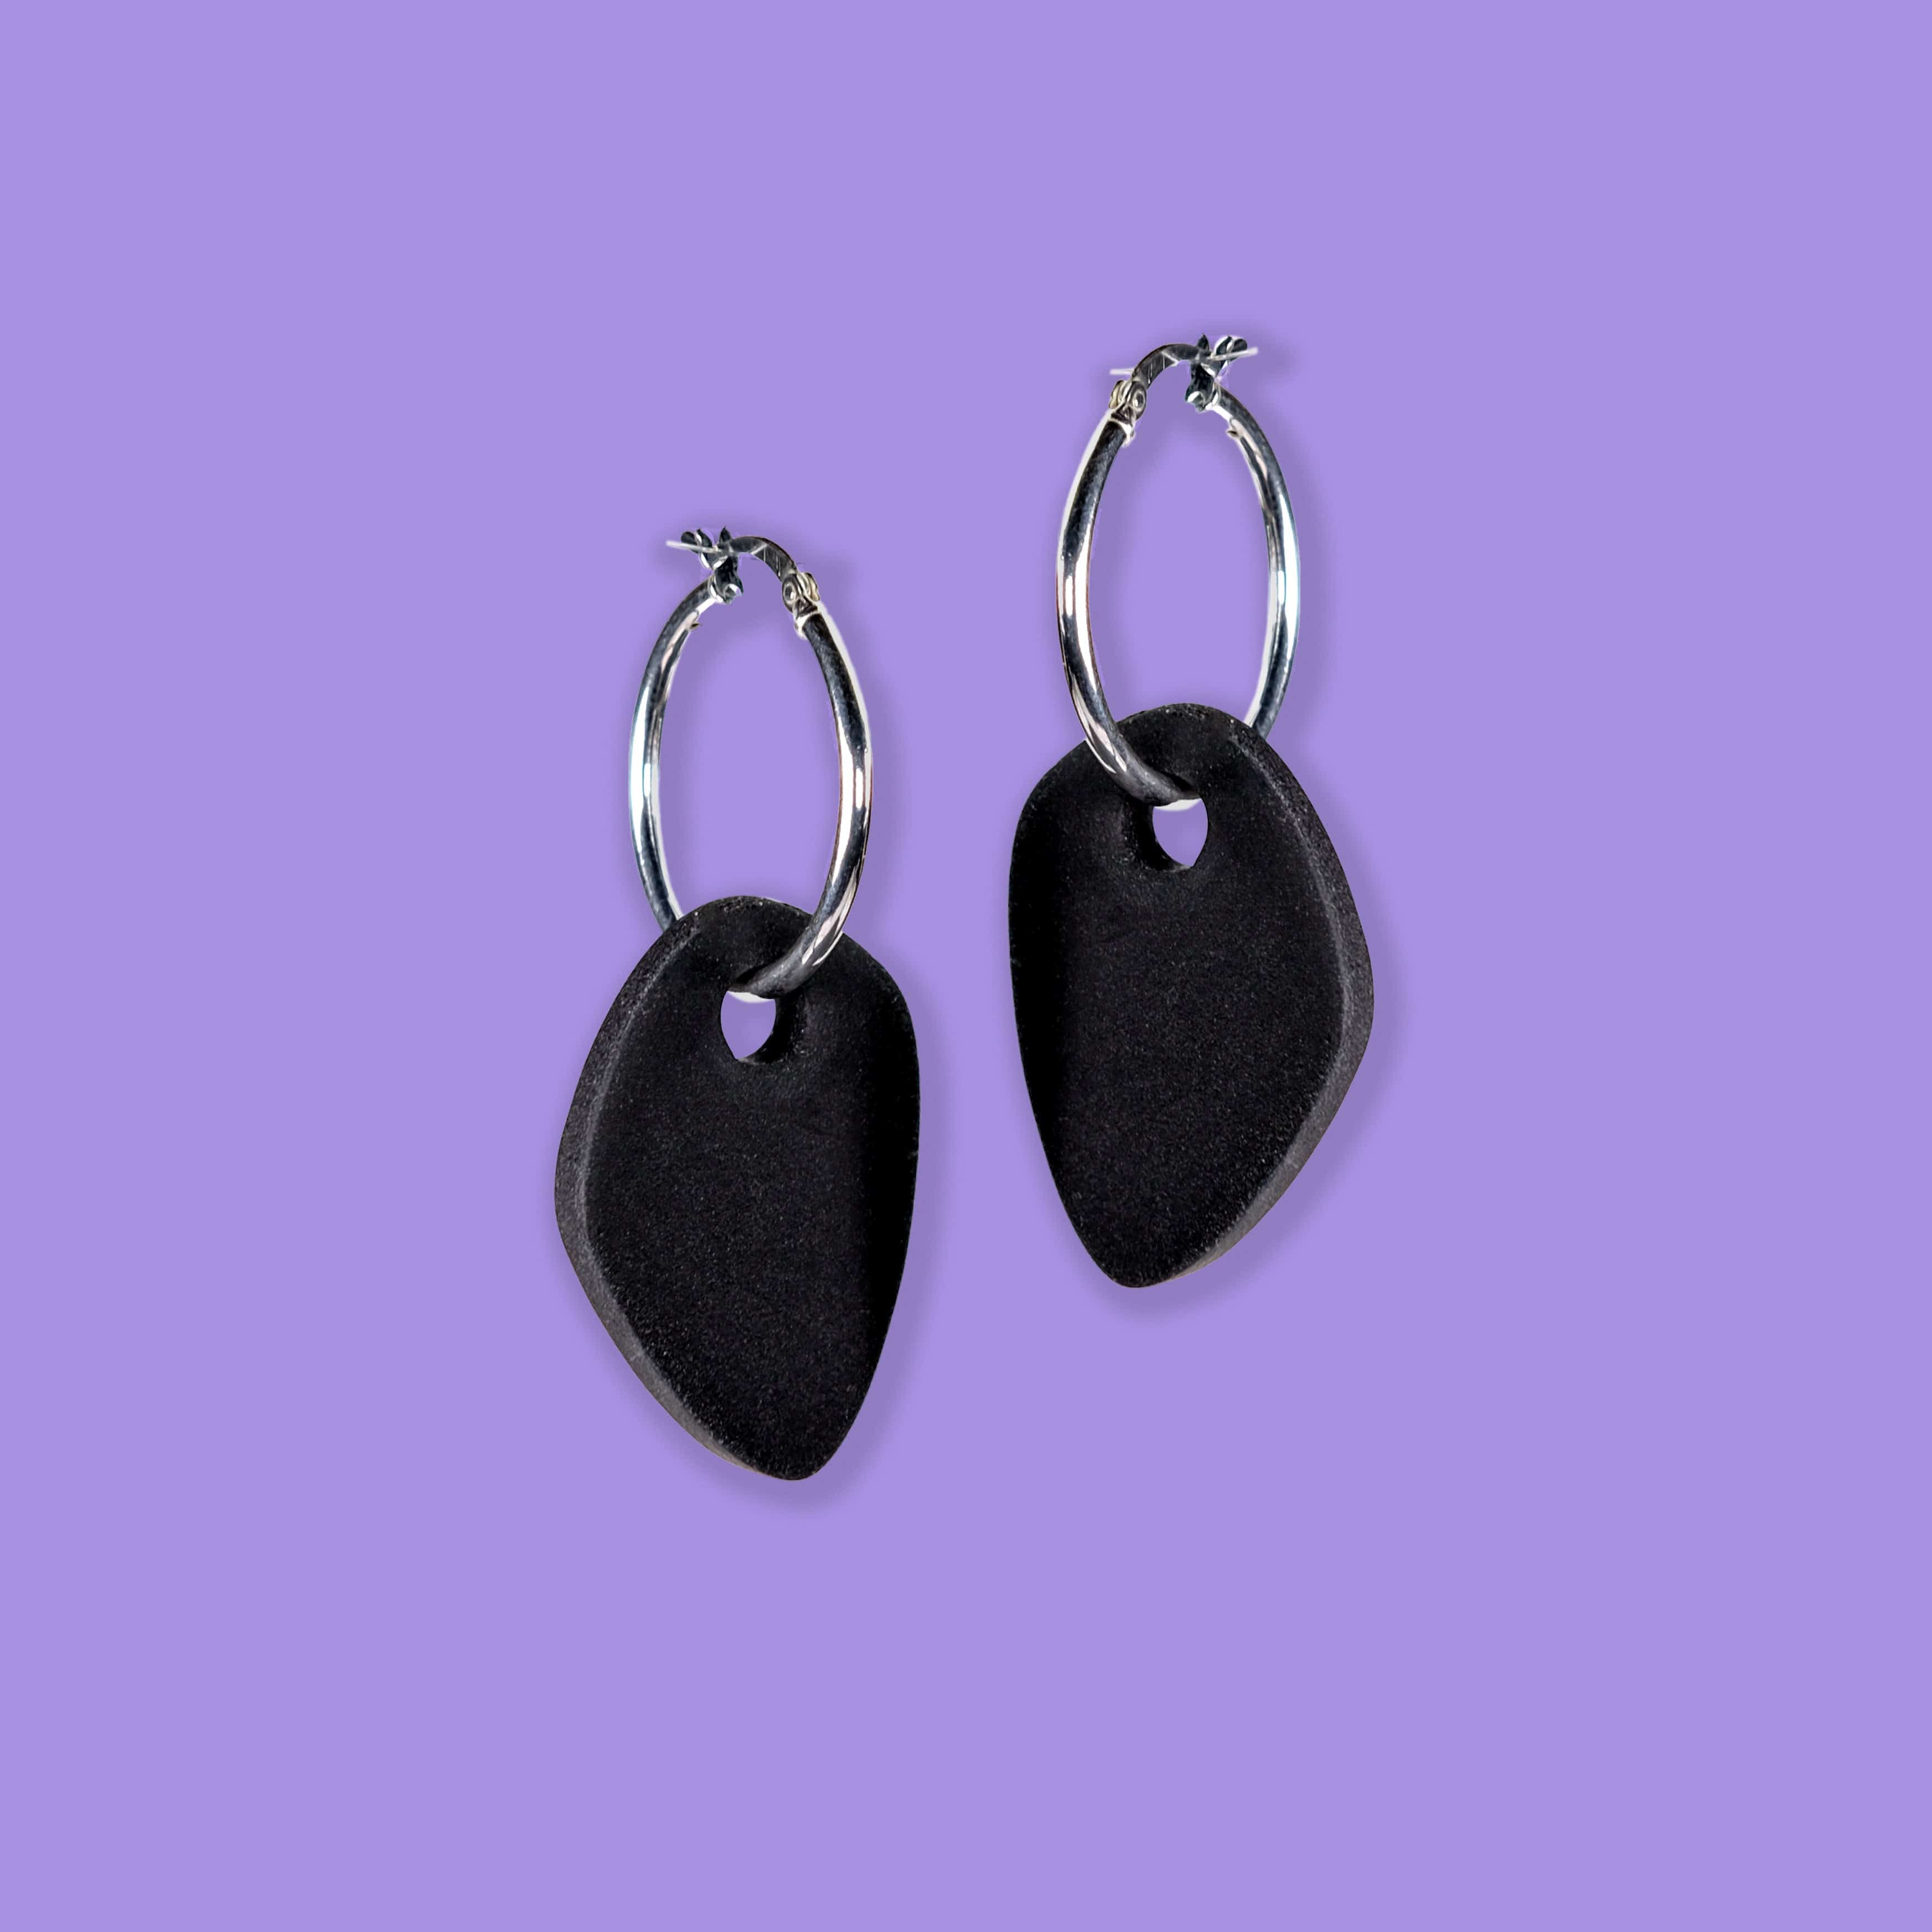 Organic shapes, artistic inspired, lightweight, dangly Calder inspired hoop earrings Calder #color_black